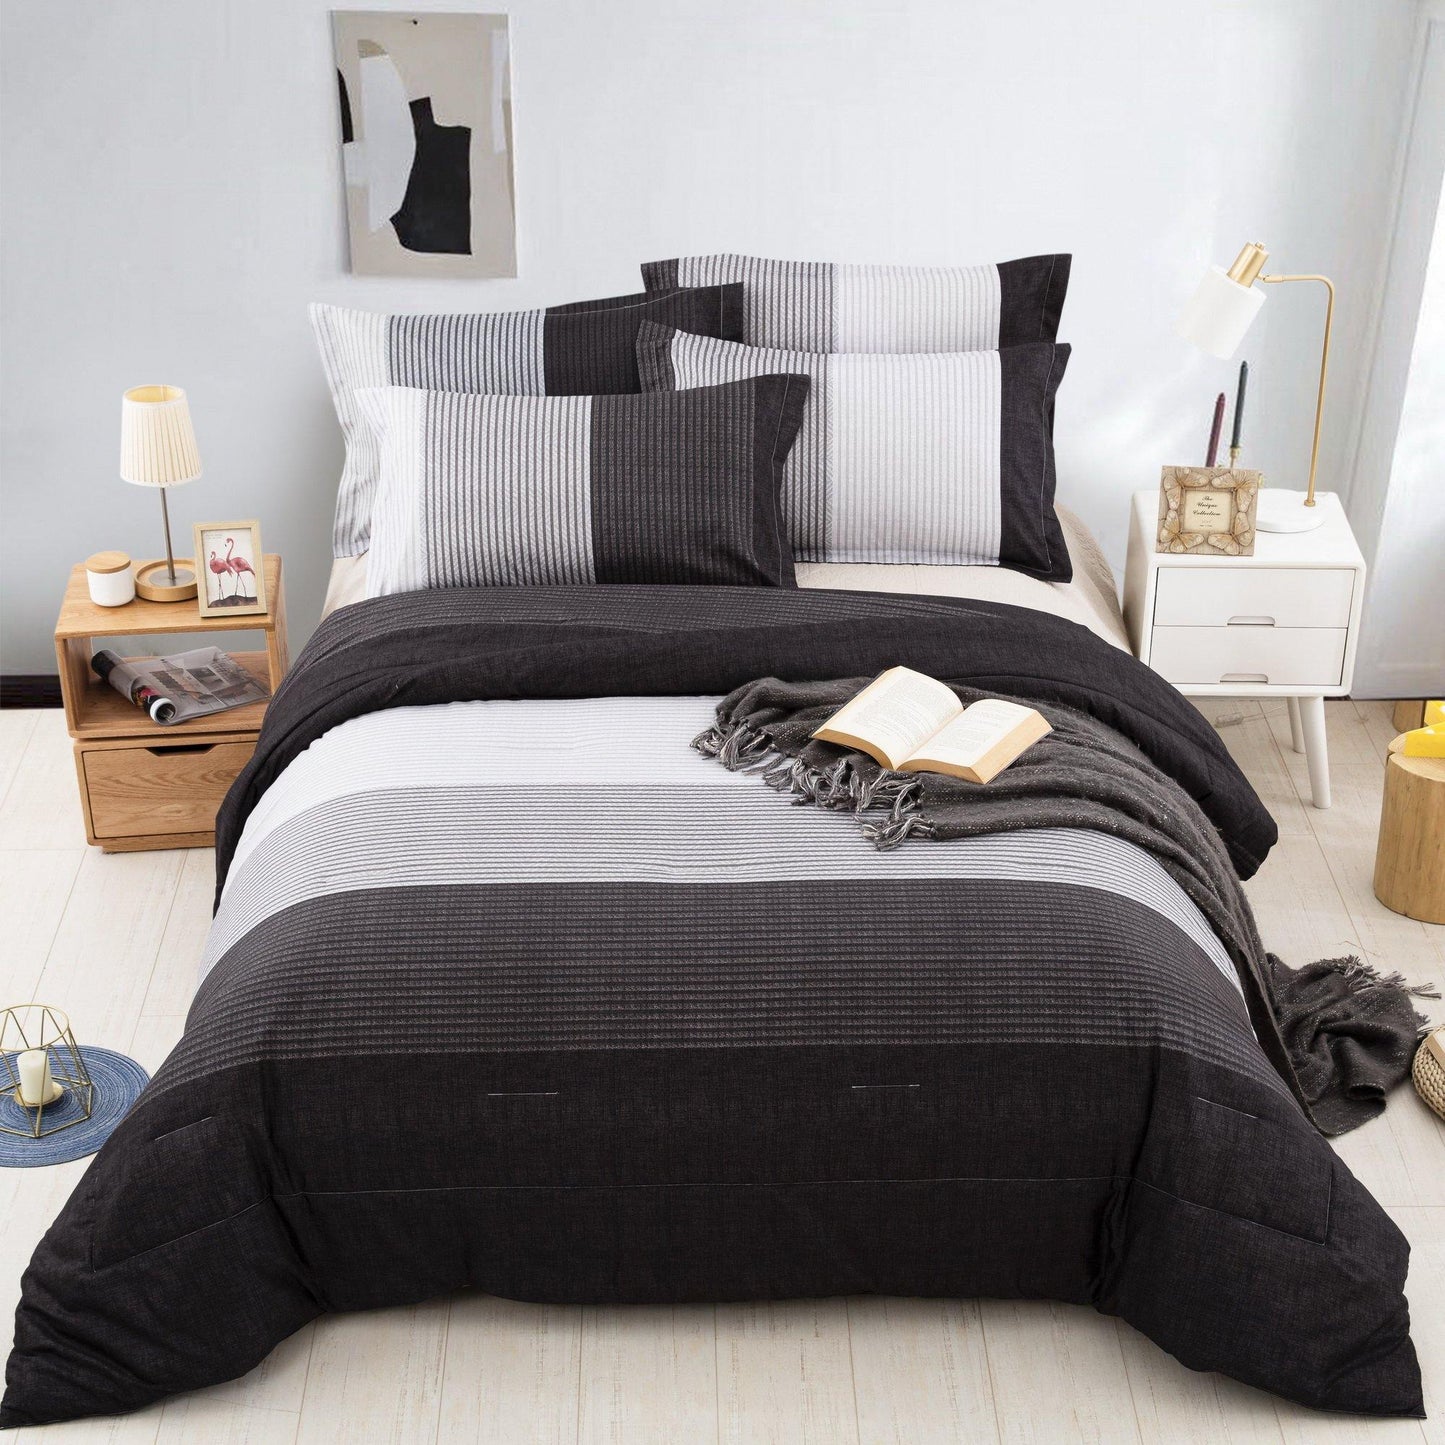 WONGS BEDDING Comforter set 3 Pieces Bedding Comforter with 2 Pillow Cases - Wongs bedding